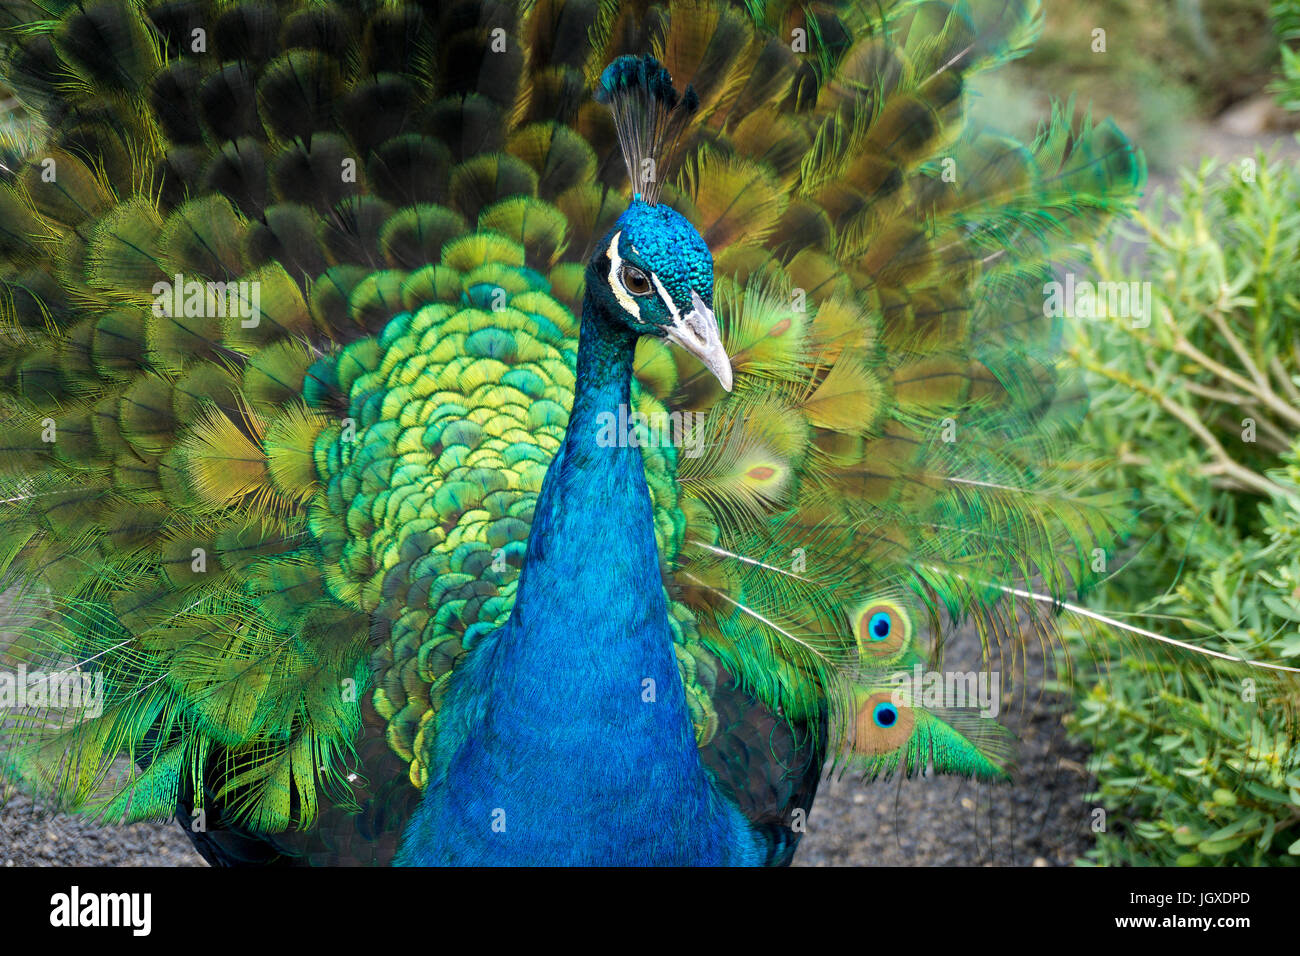 Rad schlagender blauer Pfau (Pavo cristatus) im Pardela Park, Las Pardelas, Lanzarote, Kanarische Inseln, Europa | Blue peacock (Pavo cristatus) at Pa Stock Photo